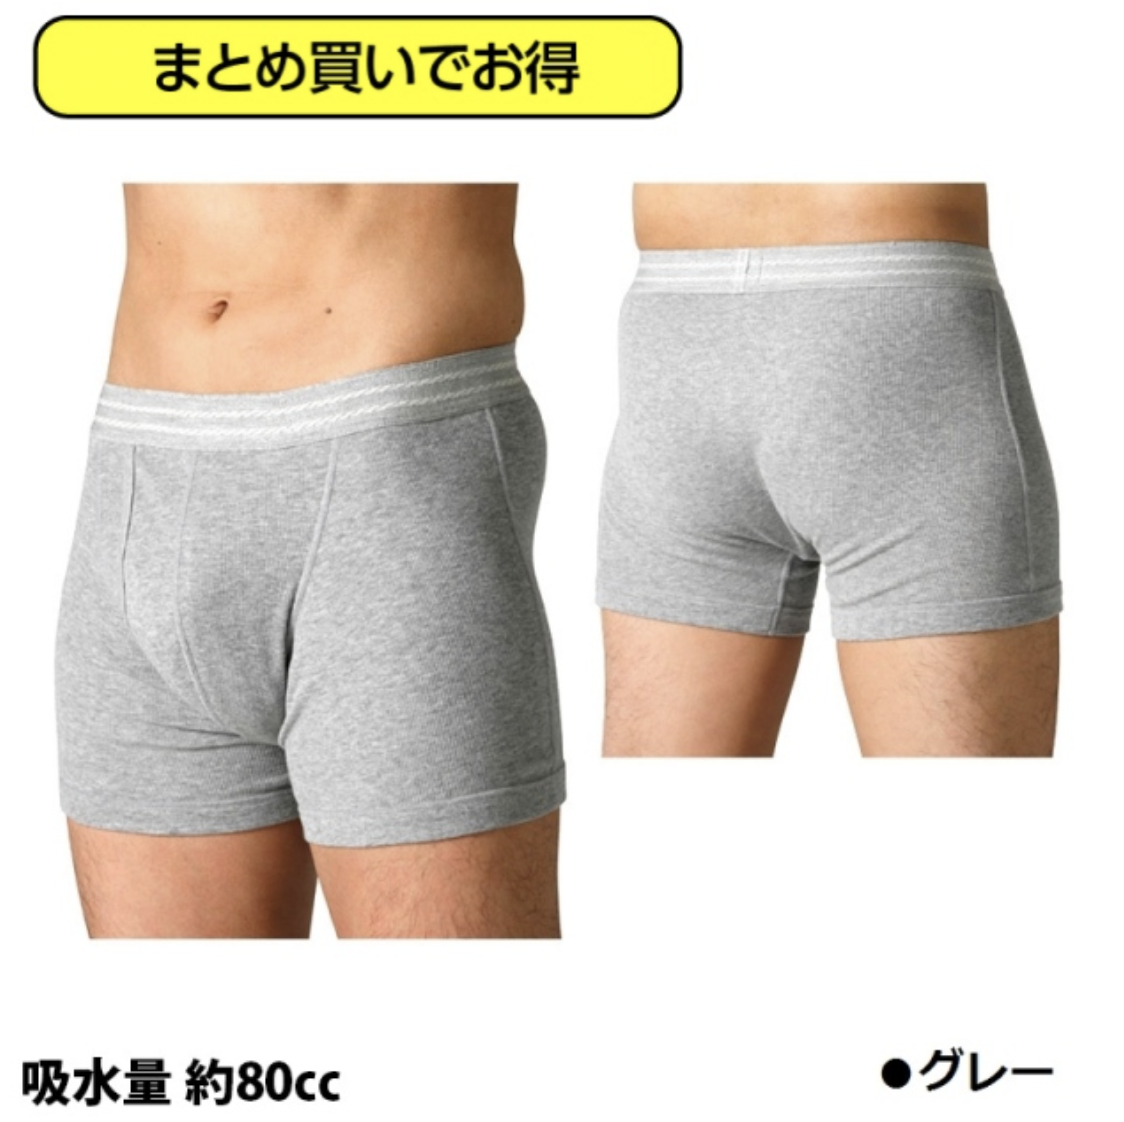 【WDまとめ買い】軽失禁パンツ ウェルドライ 男性用ソフトトランクス(吸水量80cc)